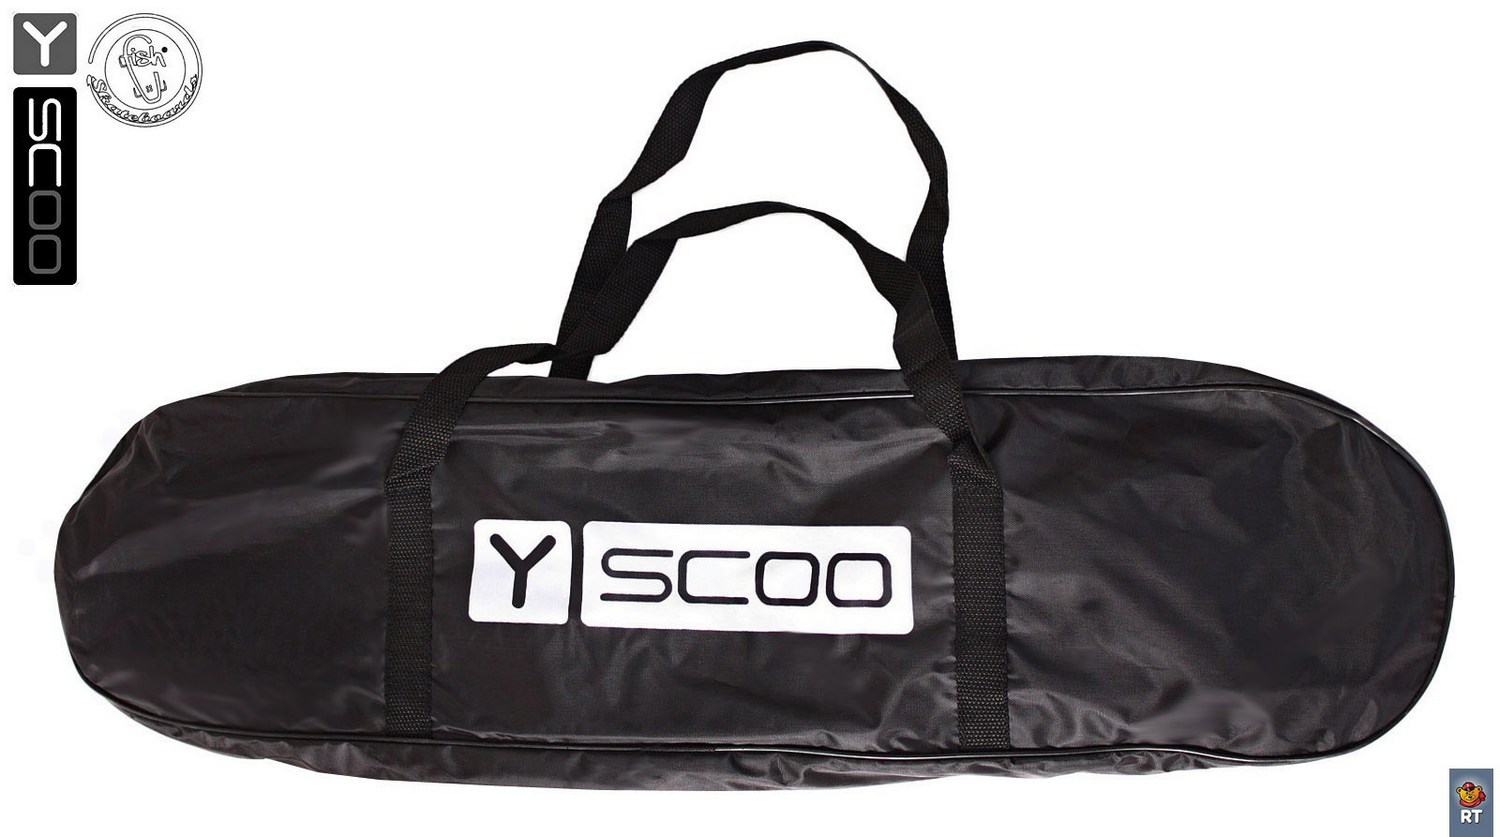 Скейтборд виниловый Y-Scoo Fishskateboard 22" 401-B с сумкой, сине-зеленый  